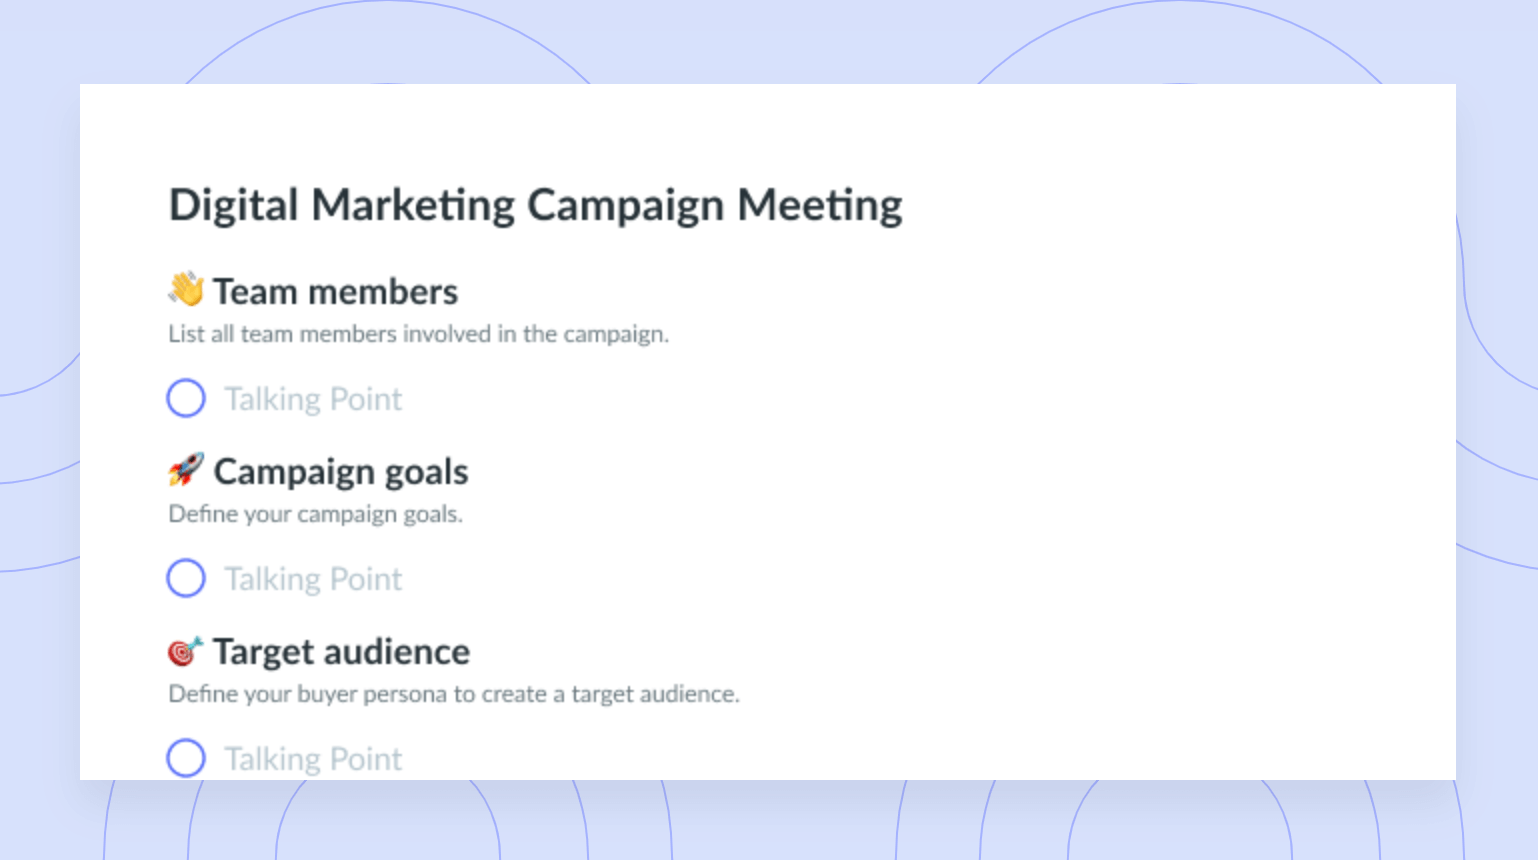 Digital Marketing Campaign Meeting Template